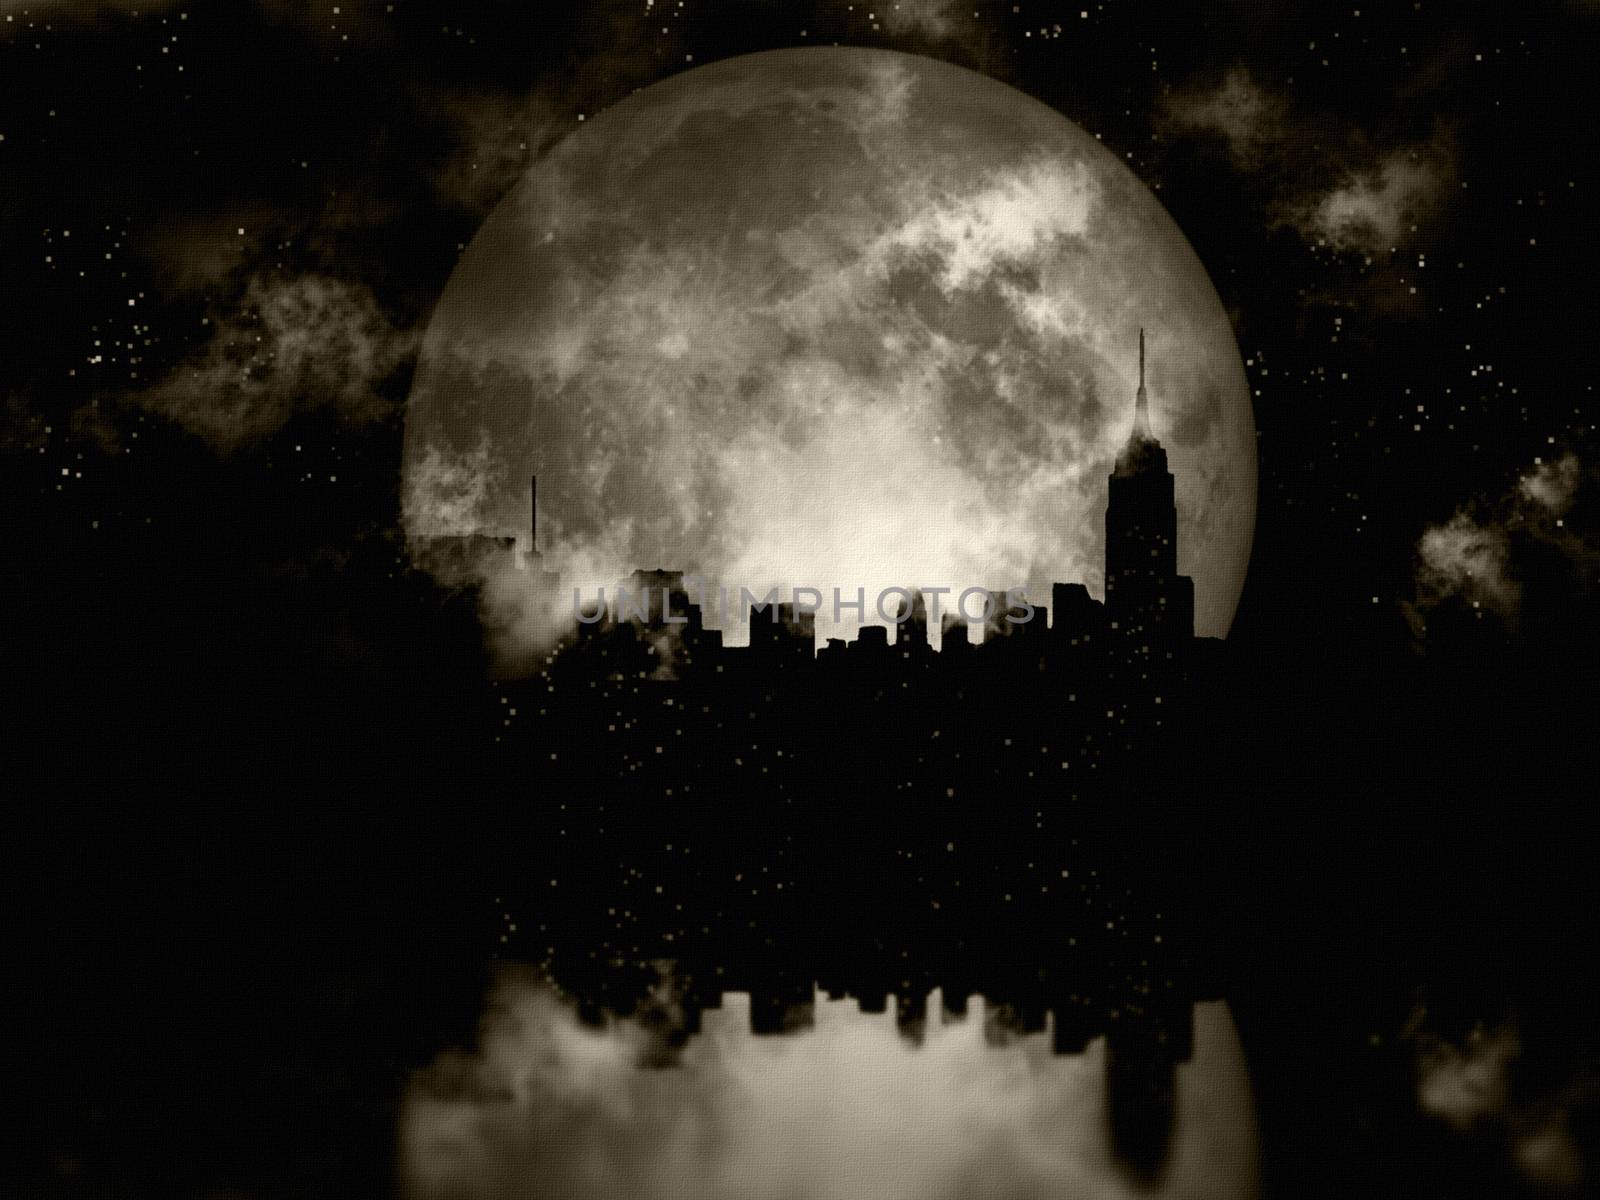 3D rendering. Full moon over night city